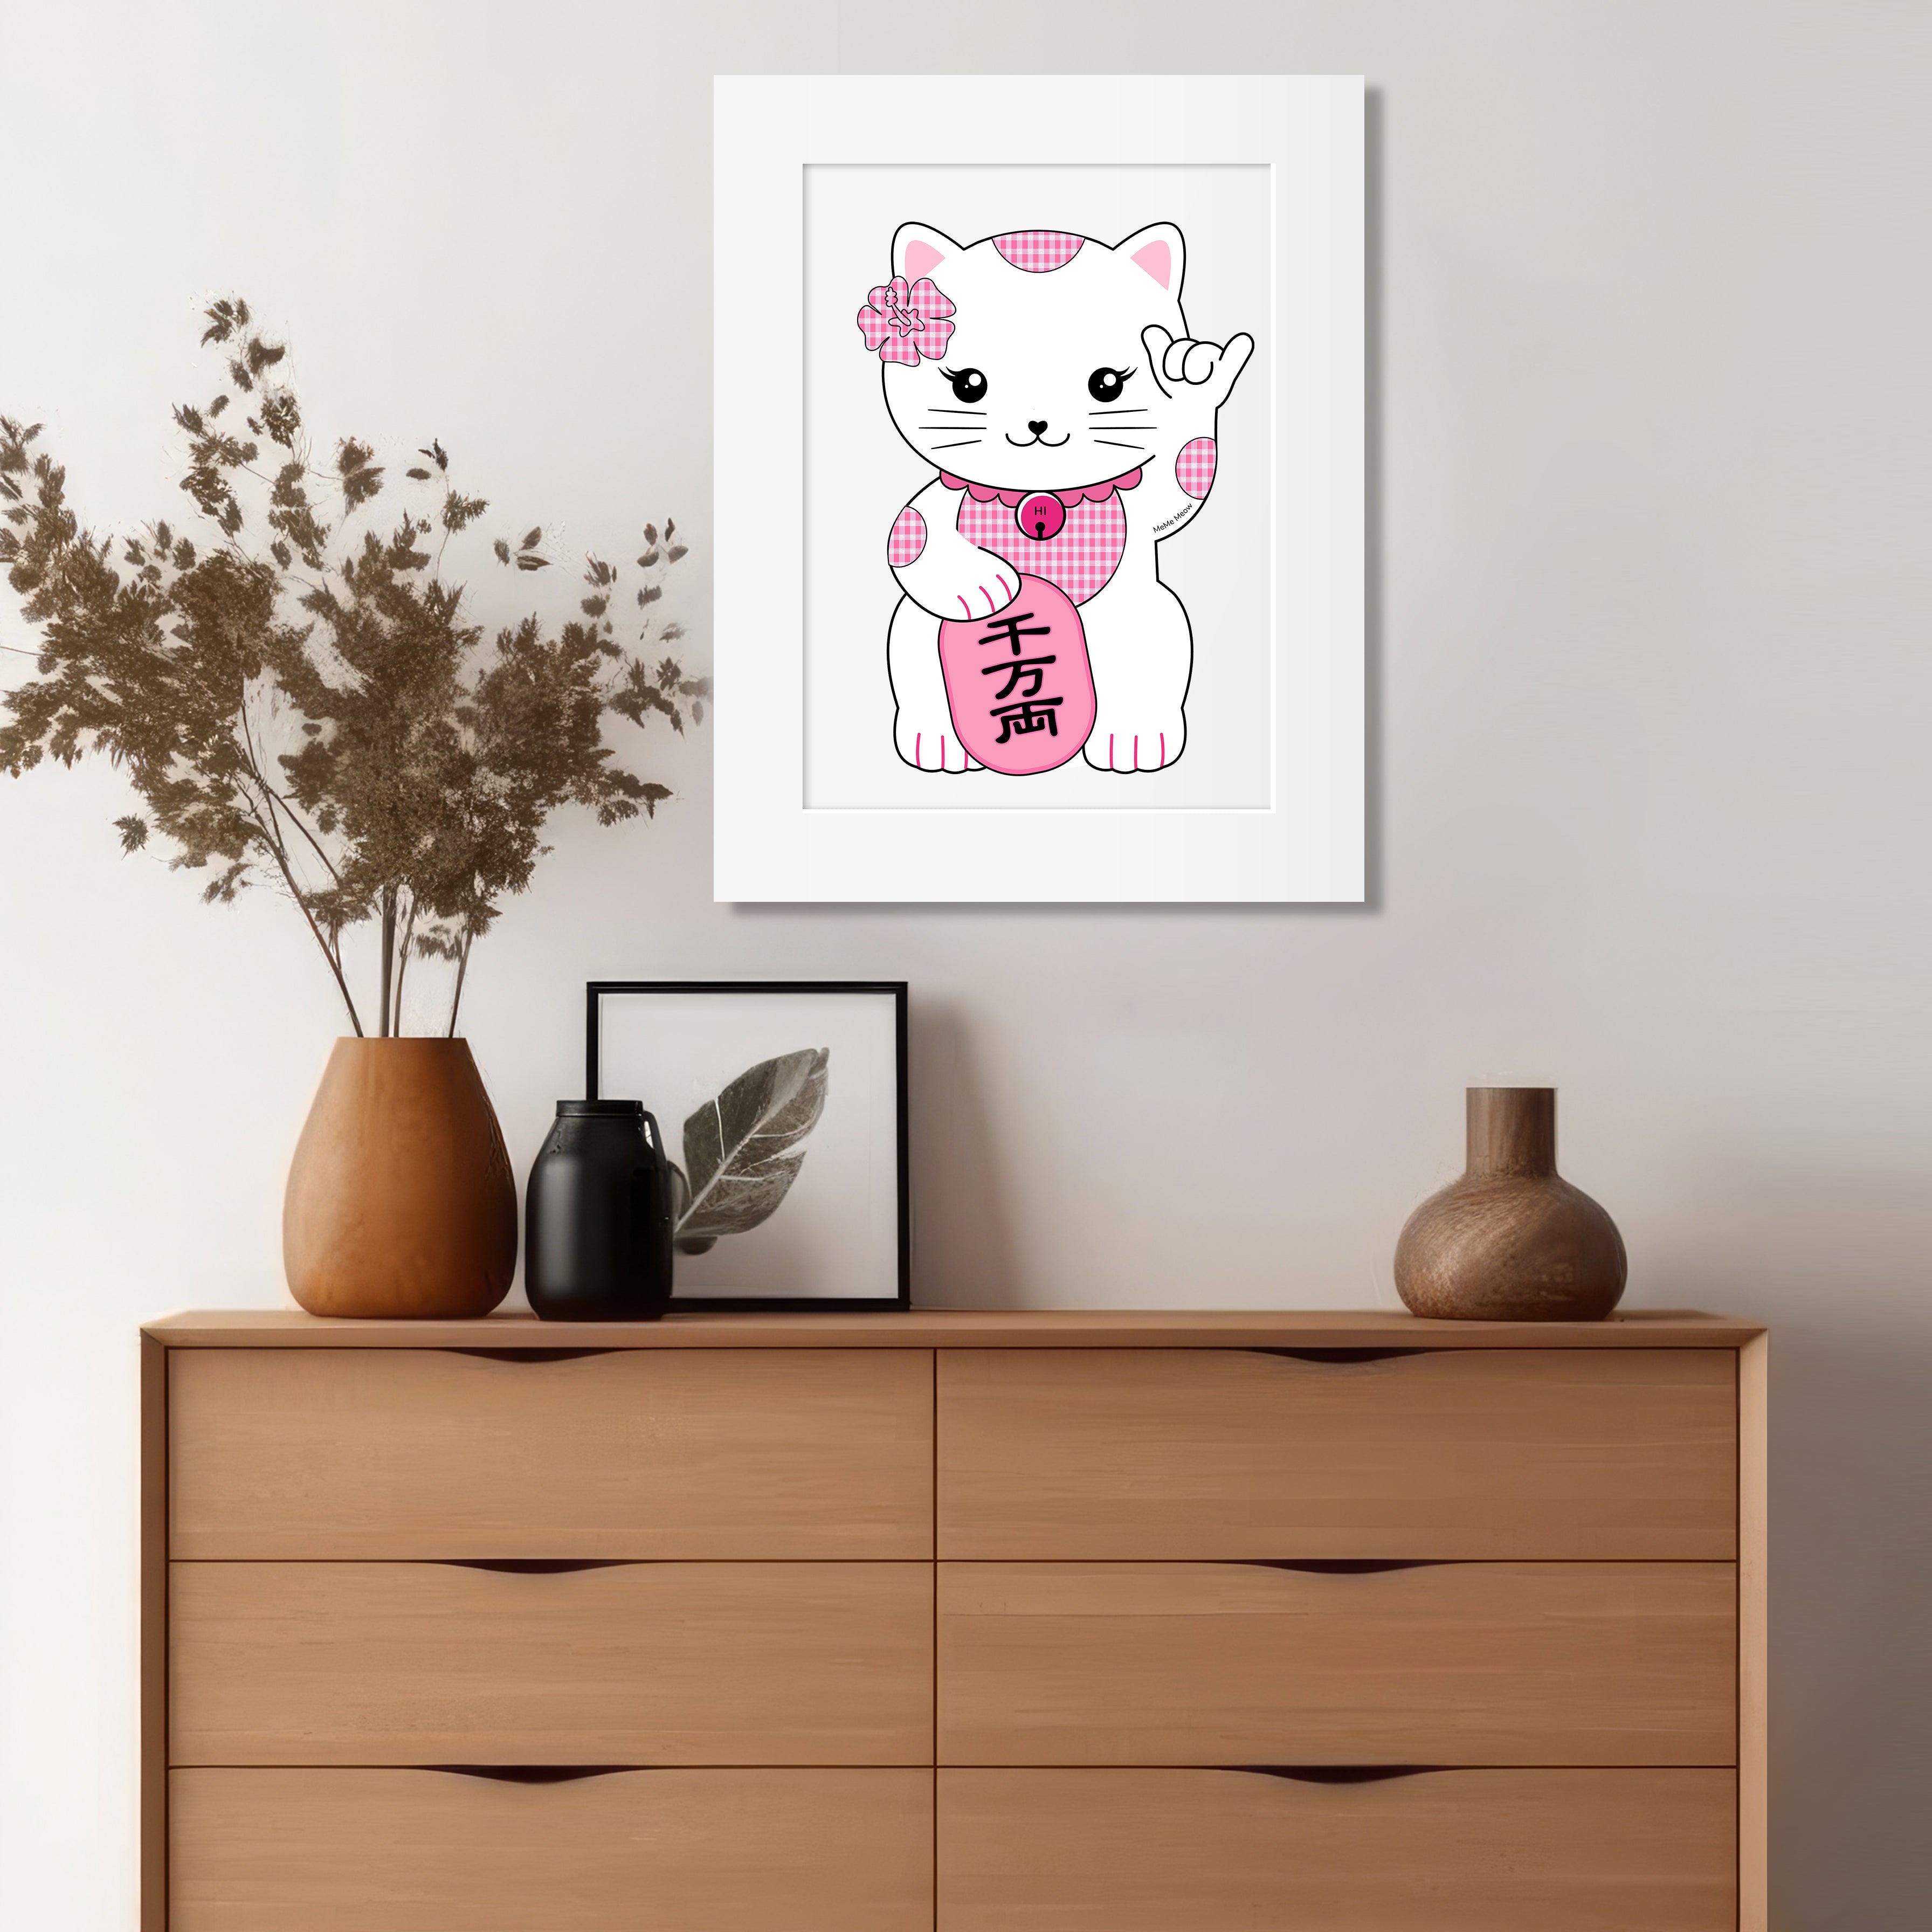 Luck and Charm Print Wall Art | MeMe Meow Maneki Neko | Citadine